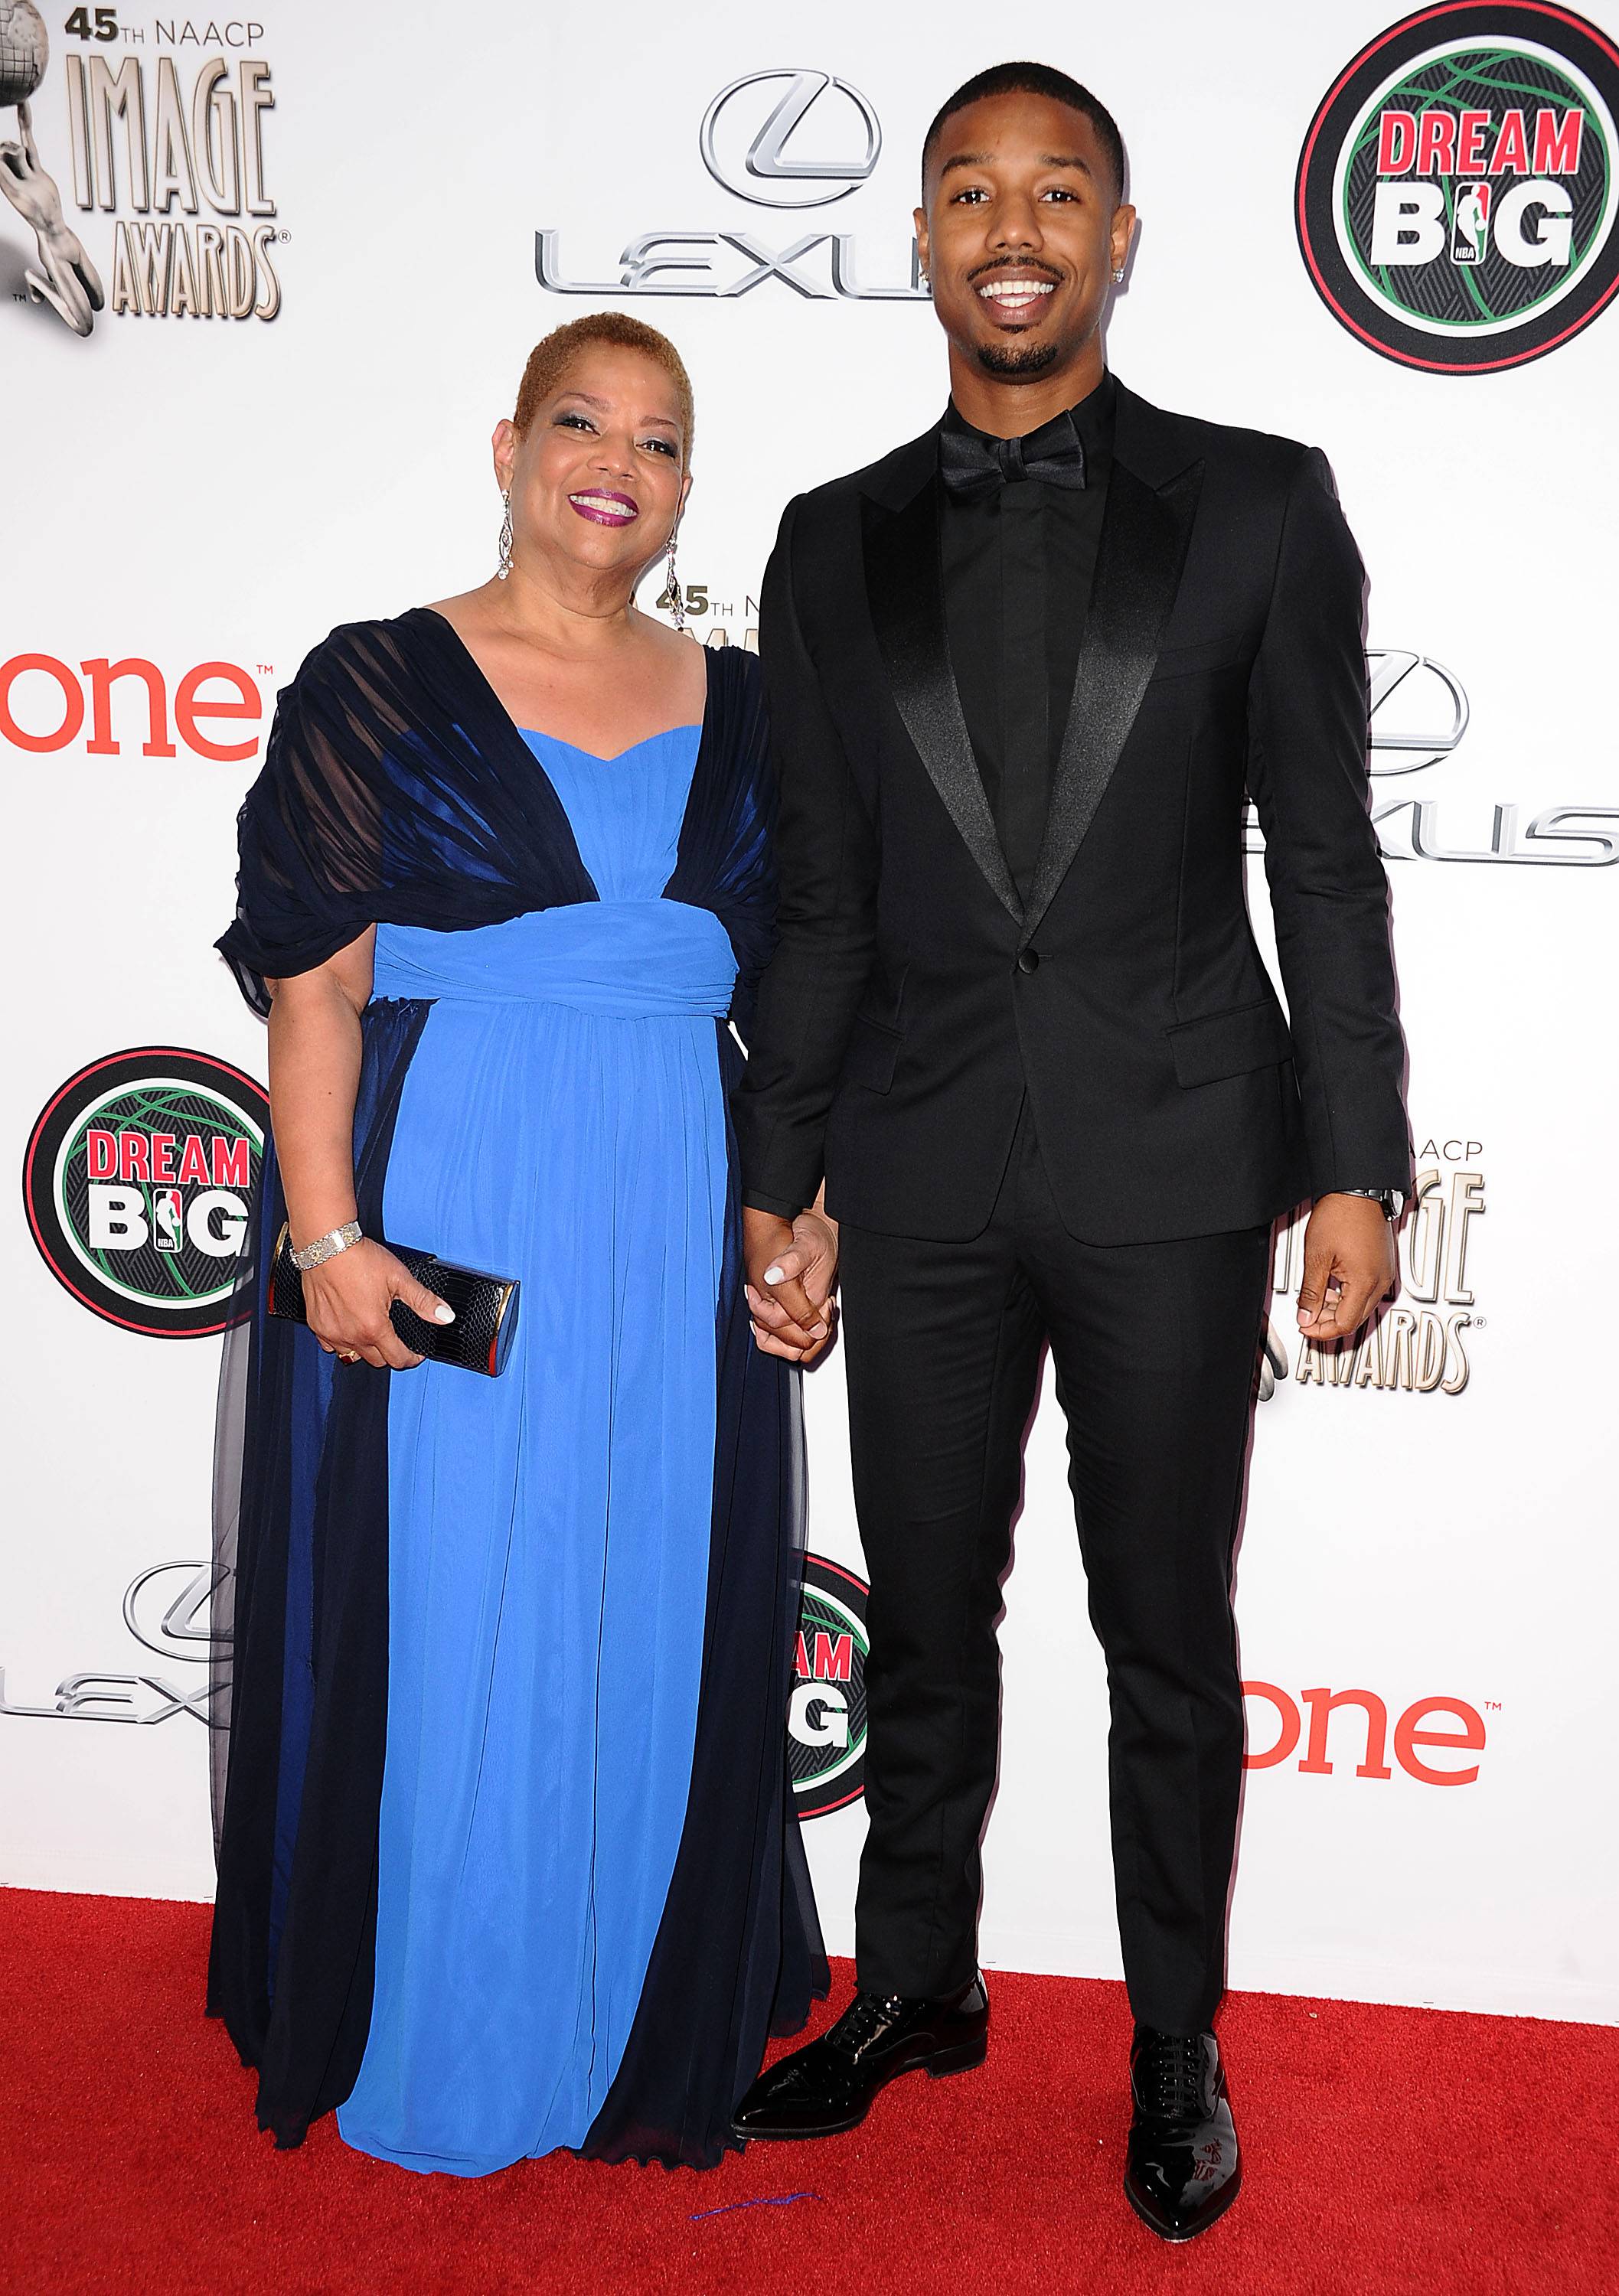 Michael B. Jordan wins big at NAACP Image Awards